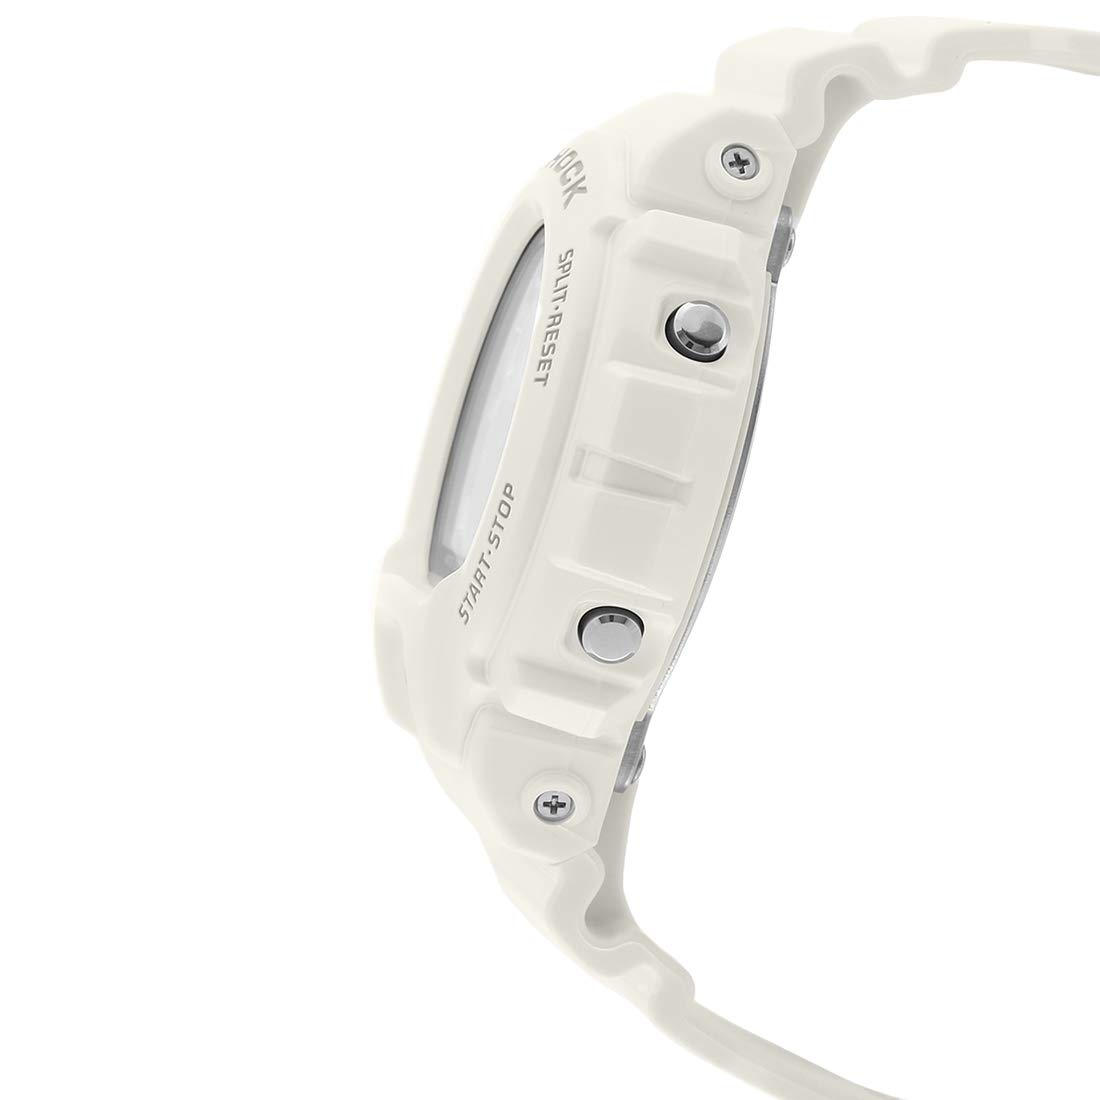 Casio G-Shock DW6900NB-7 Chronograph Digital Men's Watch (White)